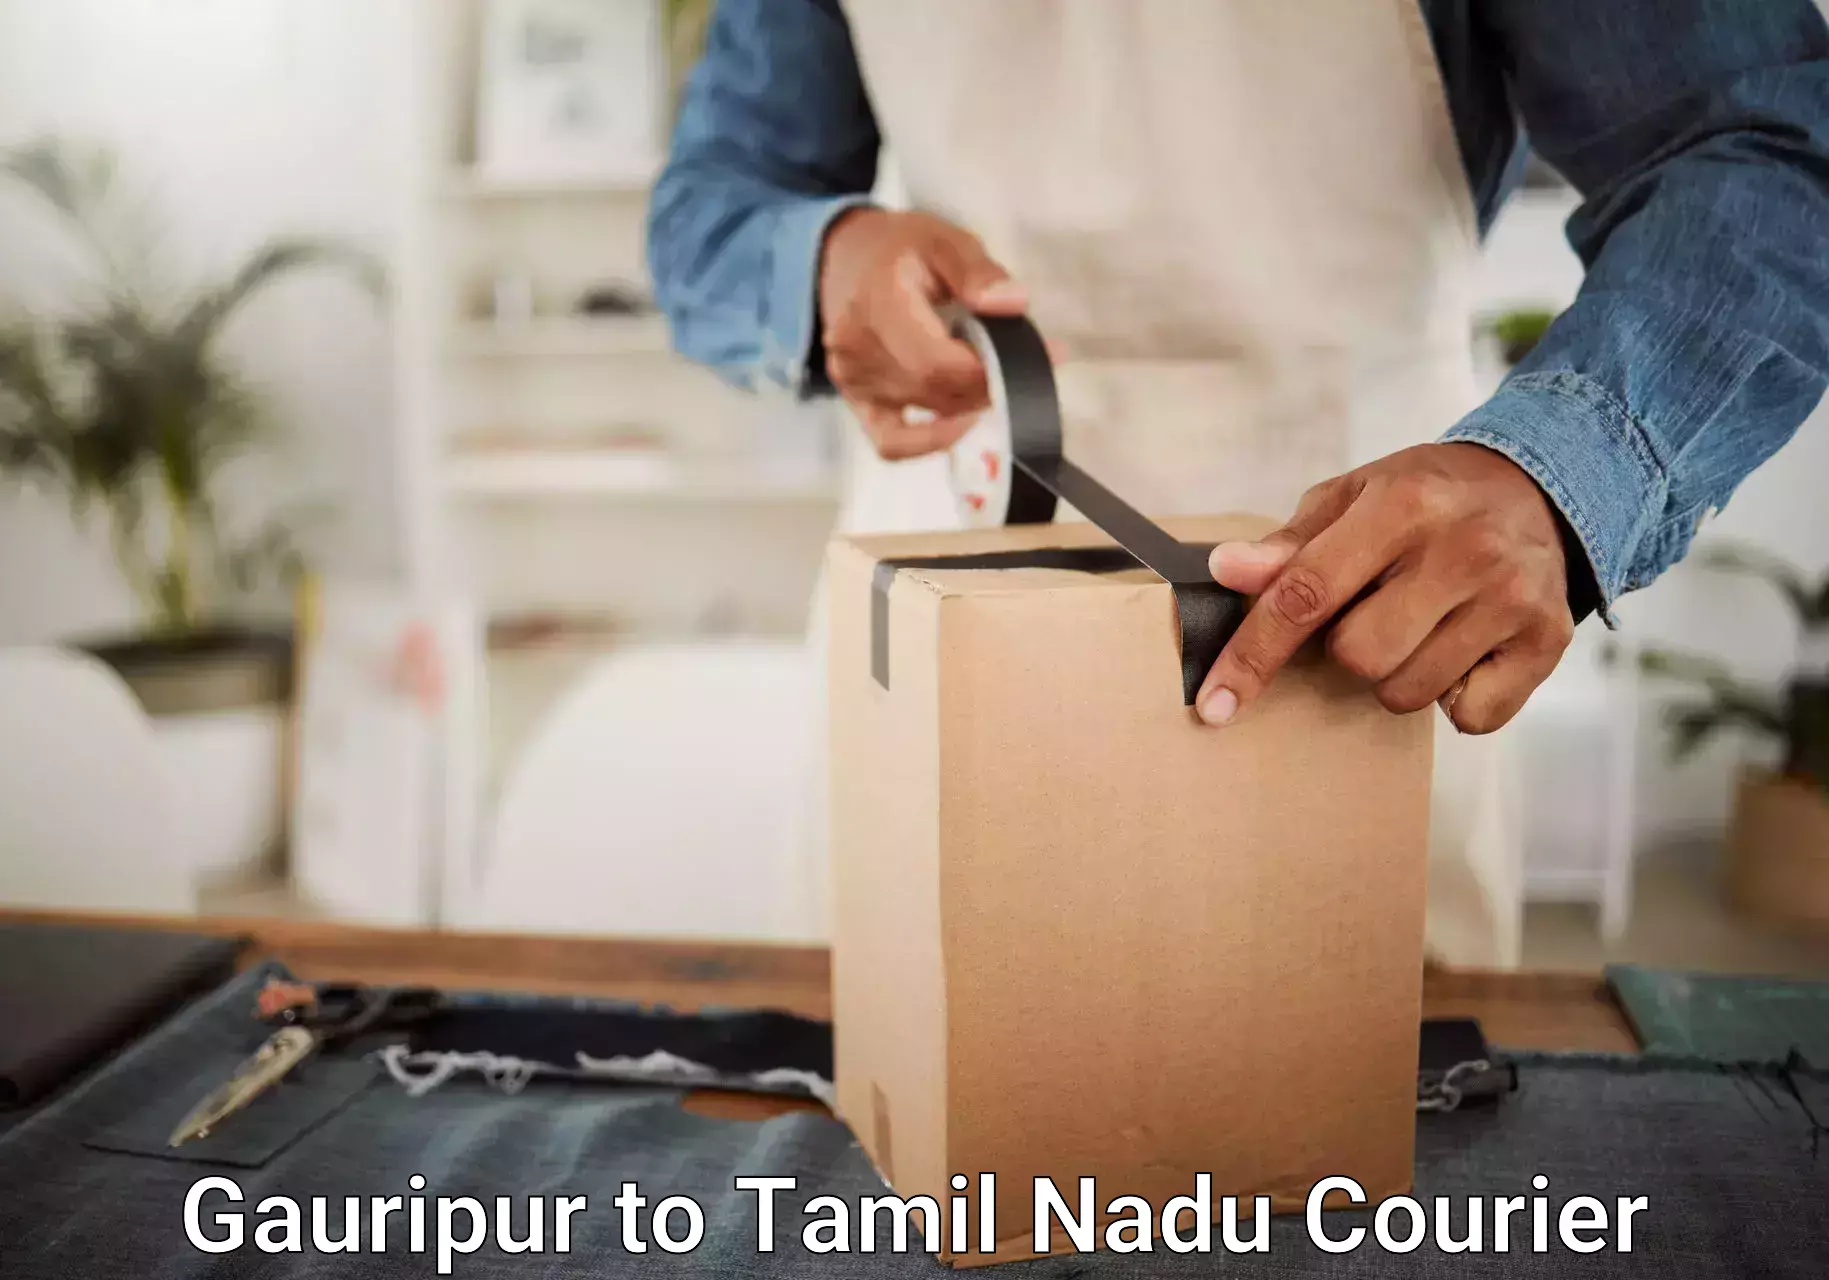 Luggage transport consultancy Gauripur to Tamil Nadu